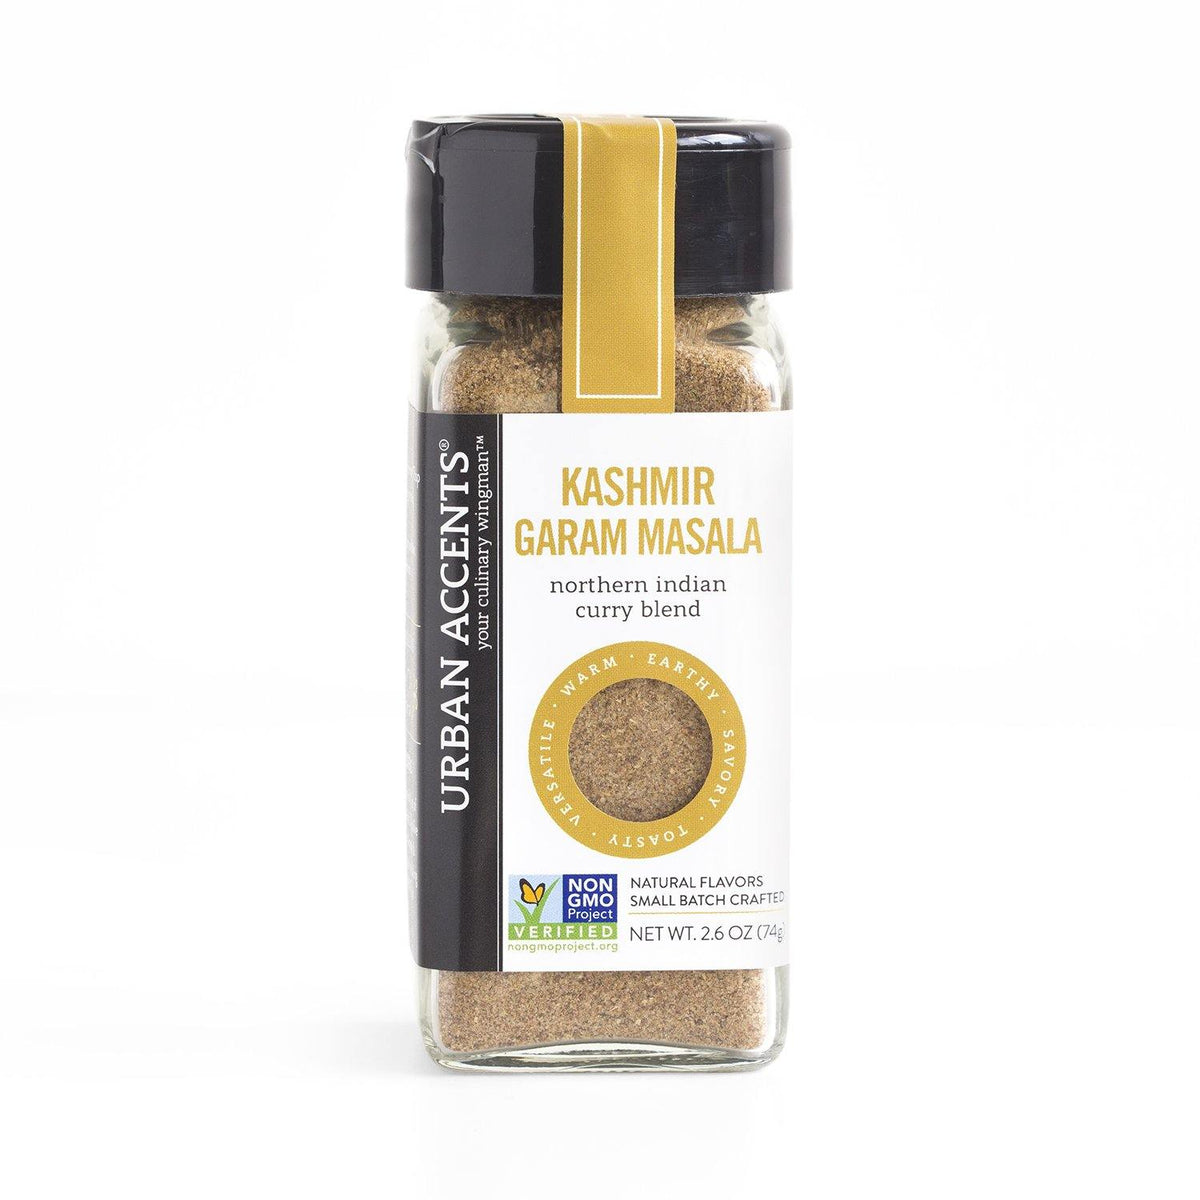 garam masala spice blend from India - wilfriedscooking